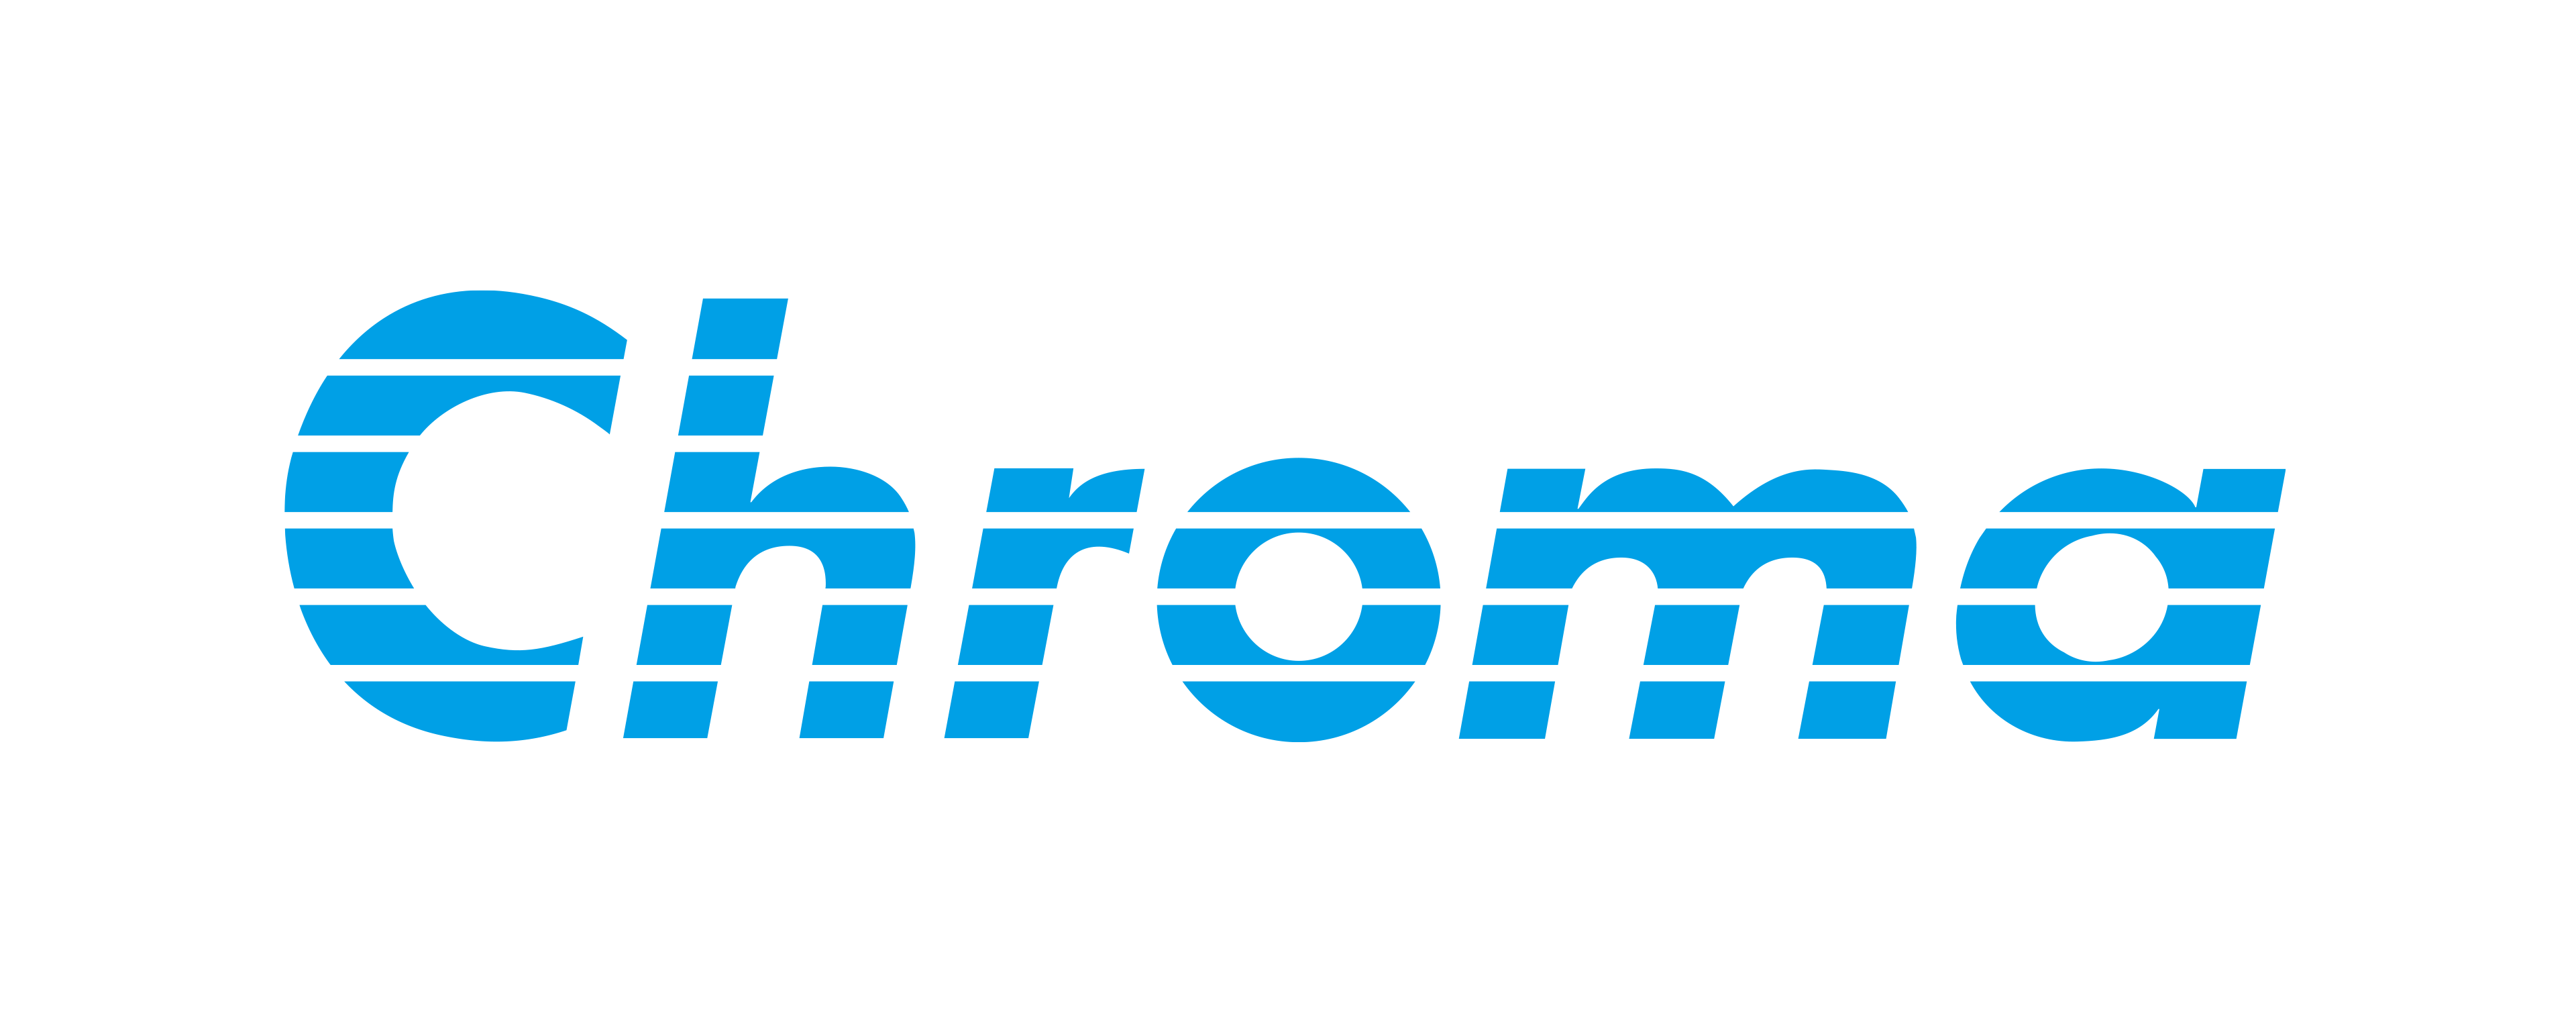 Chroma Germany GmbH